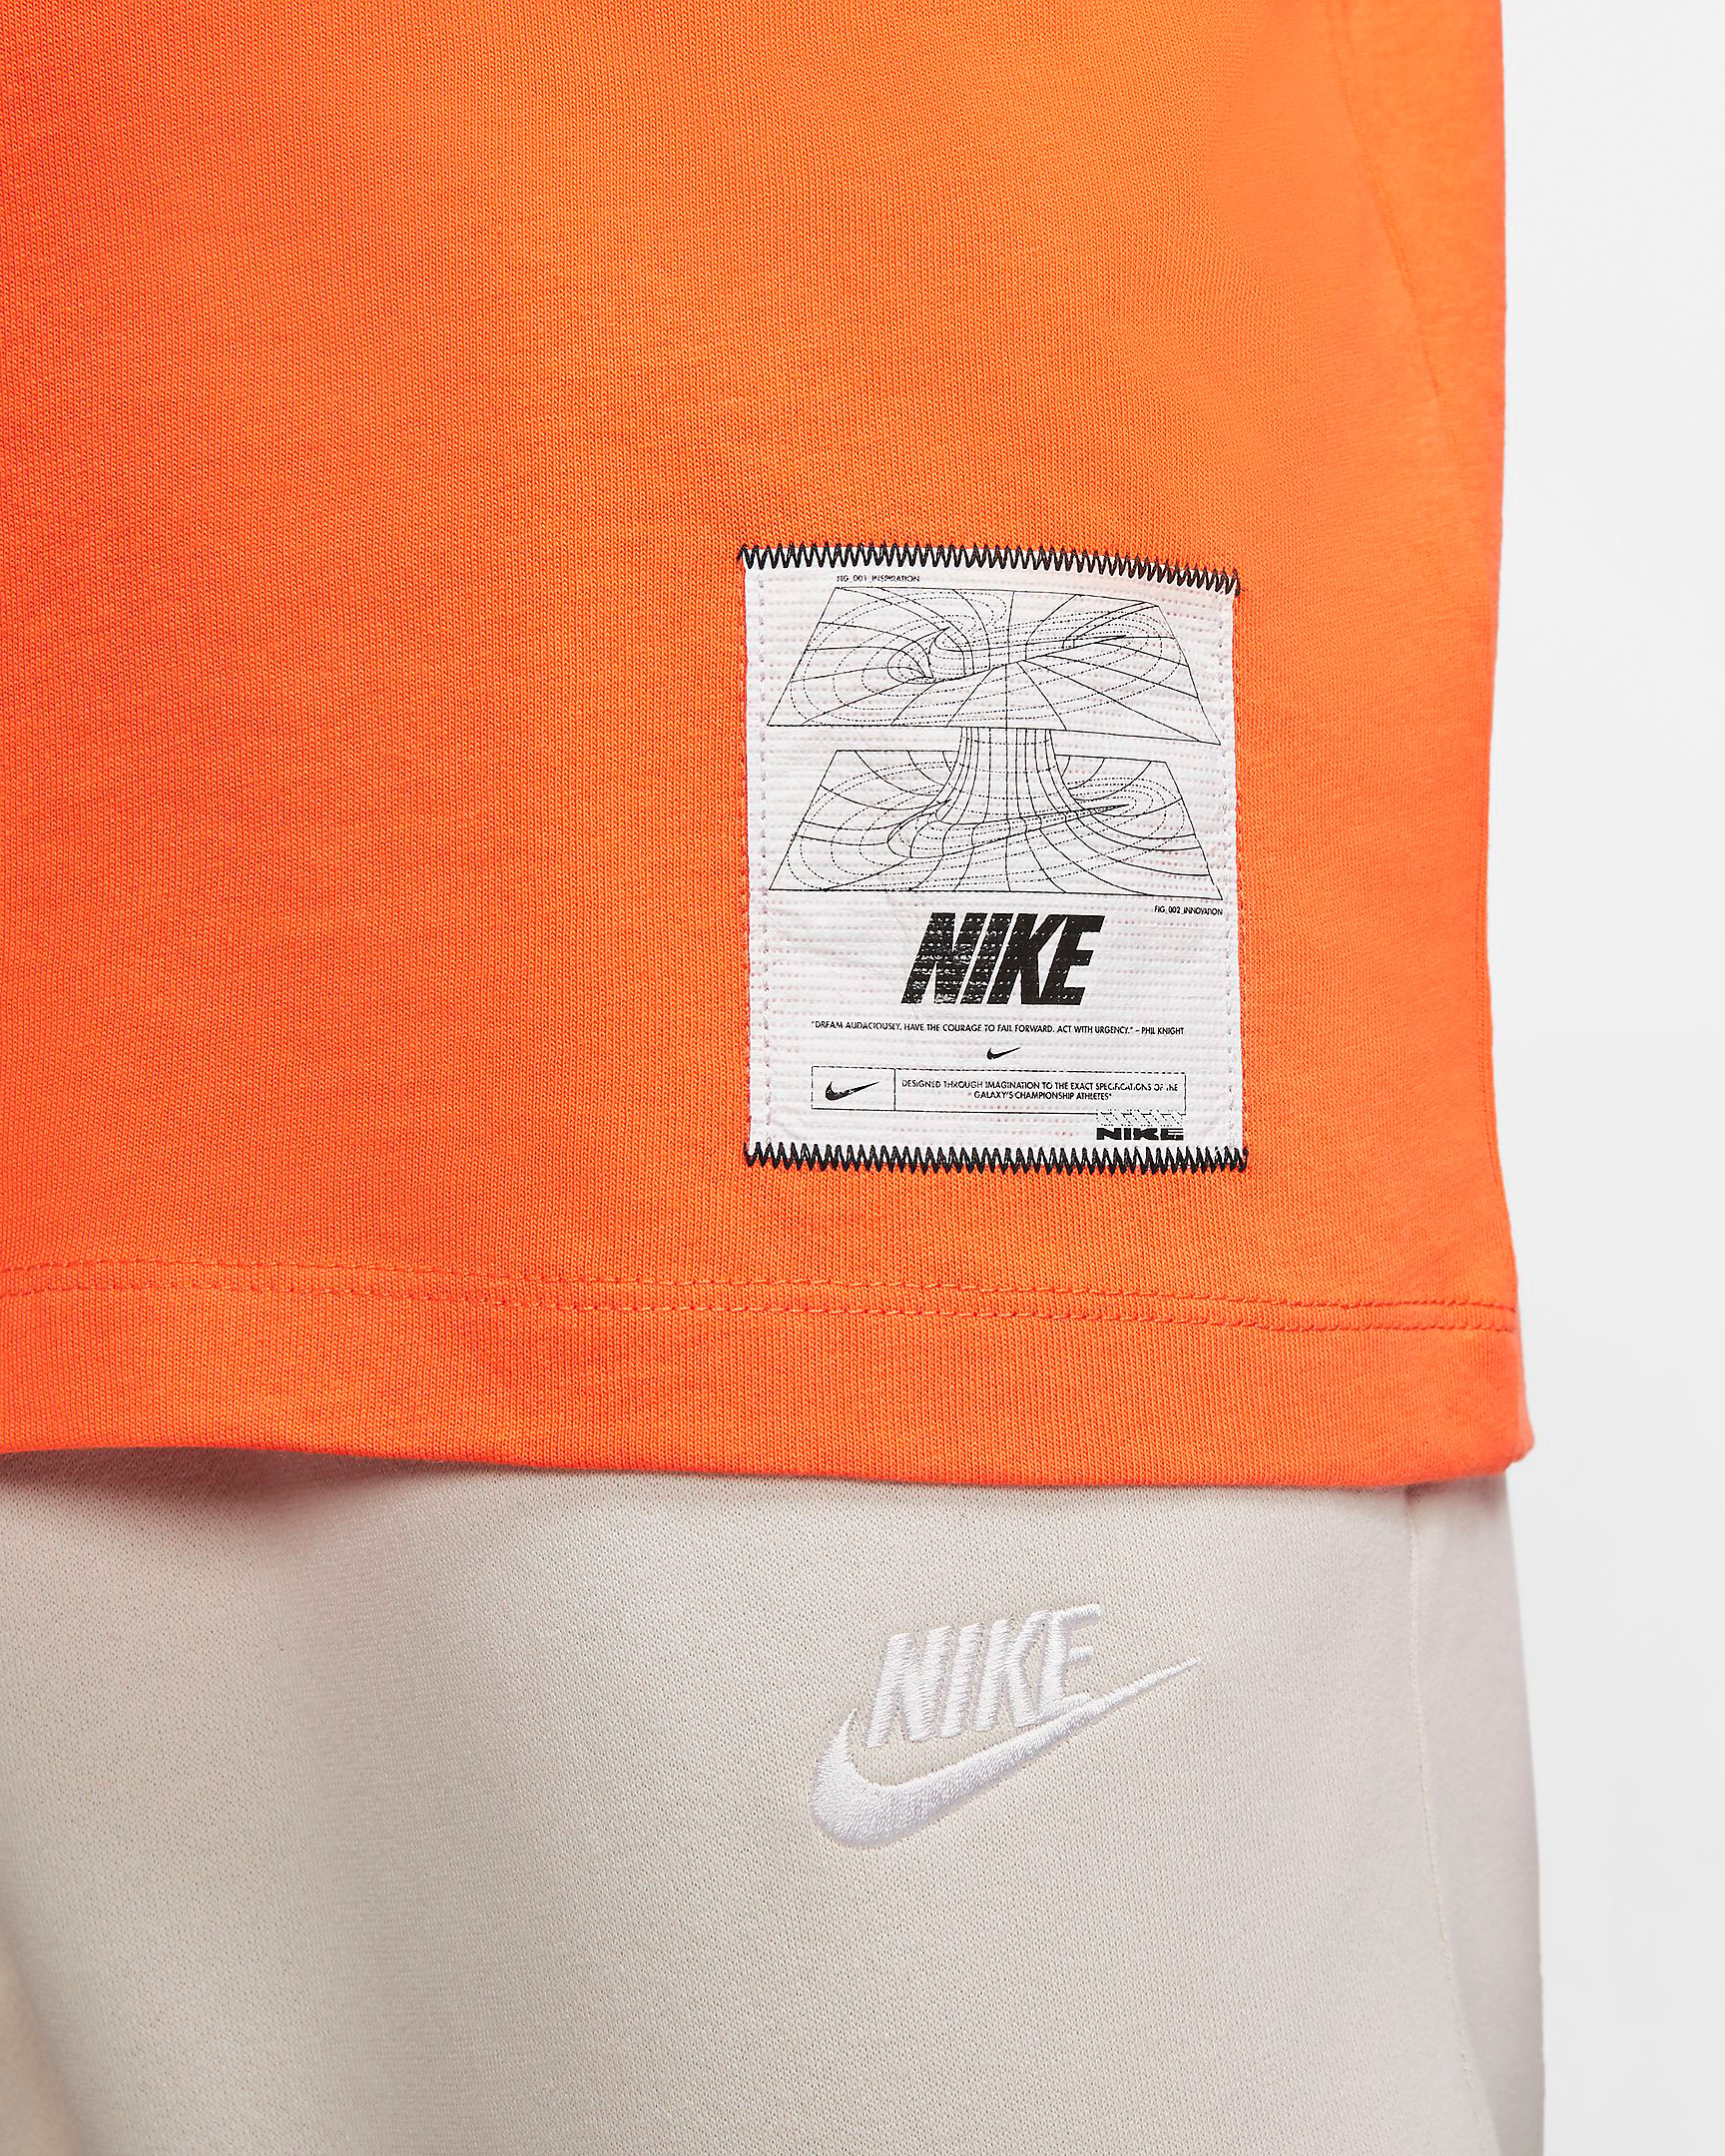 nike-air-foamposite-one-rugged-orange-matching-tee-shirt-4